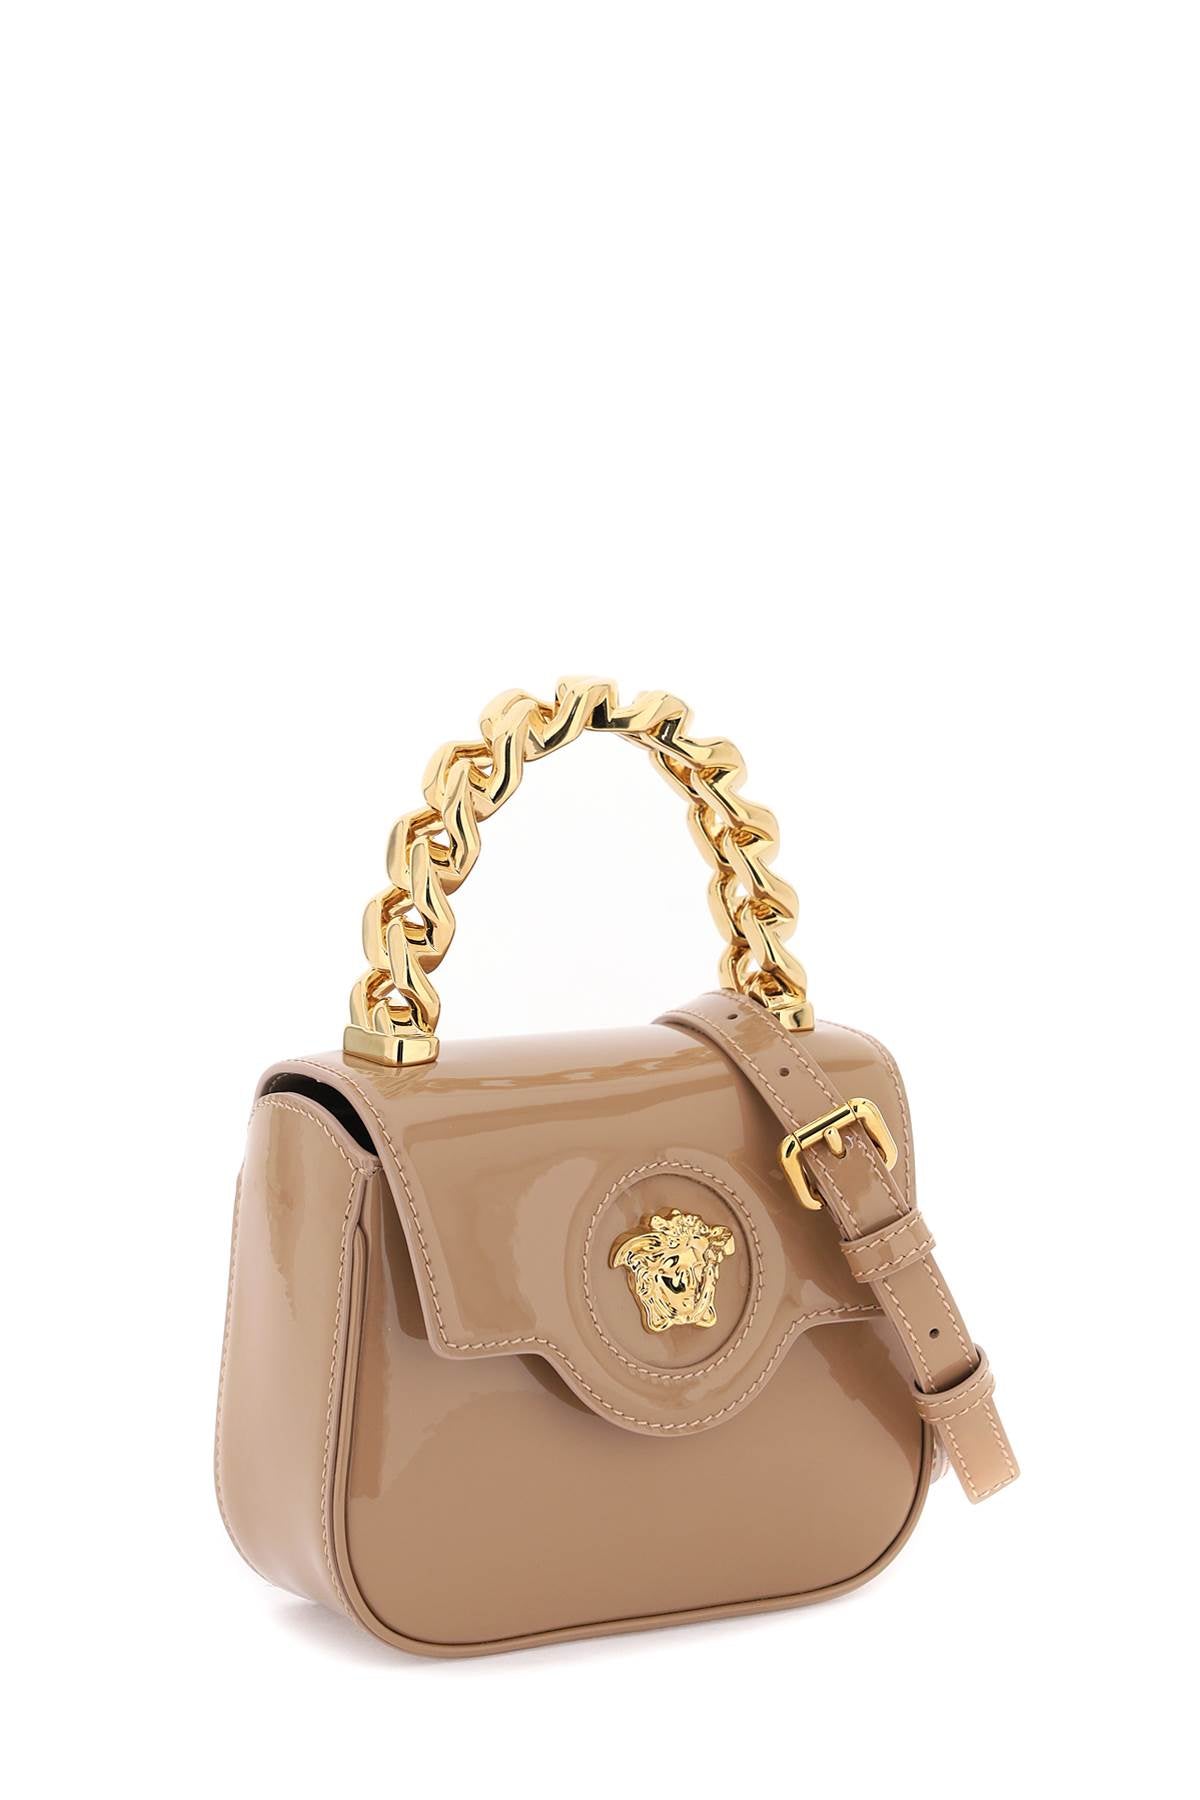 VERSACE Tan Patent Leather Mini Medusa Handbag with Gold-Tone Chain and Detachable Strap